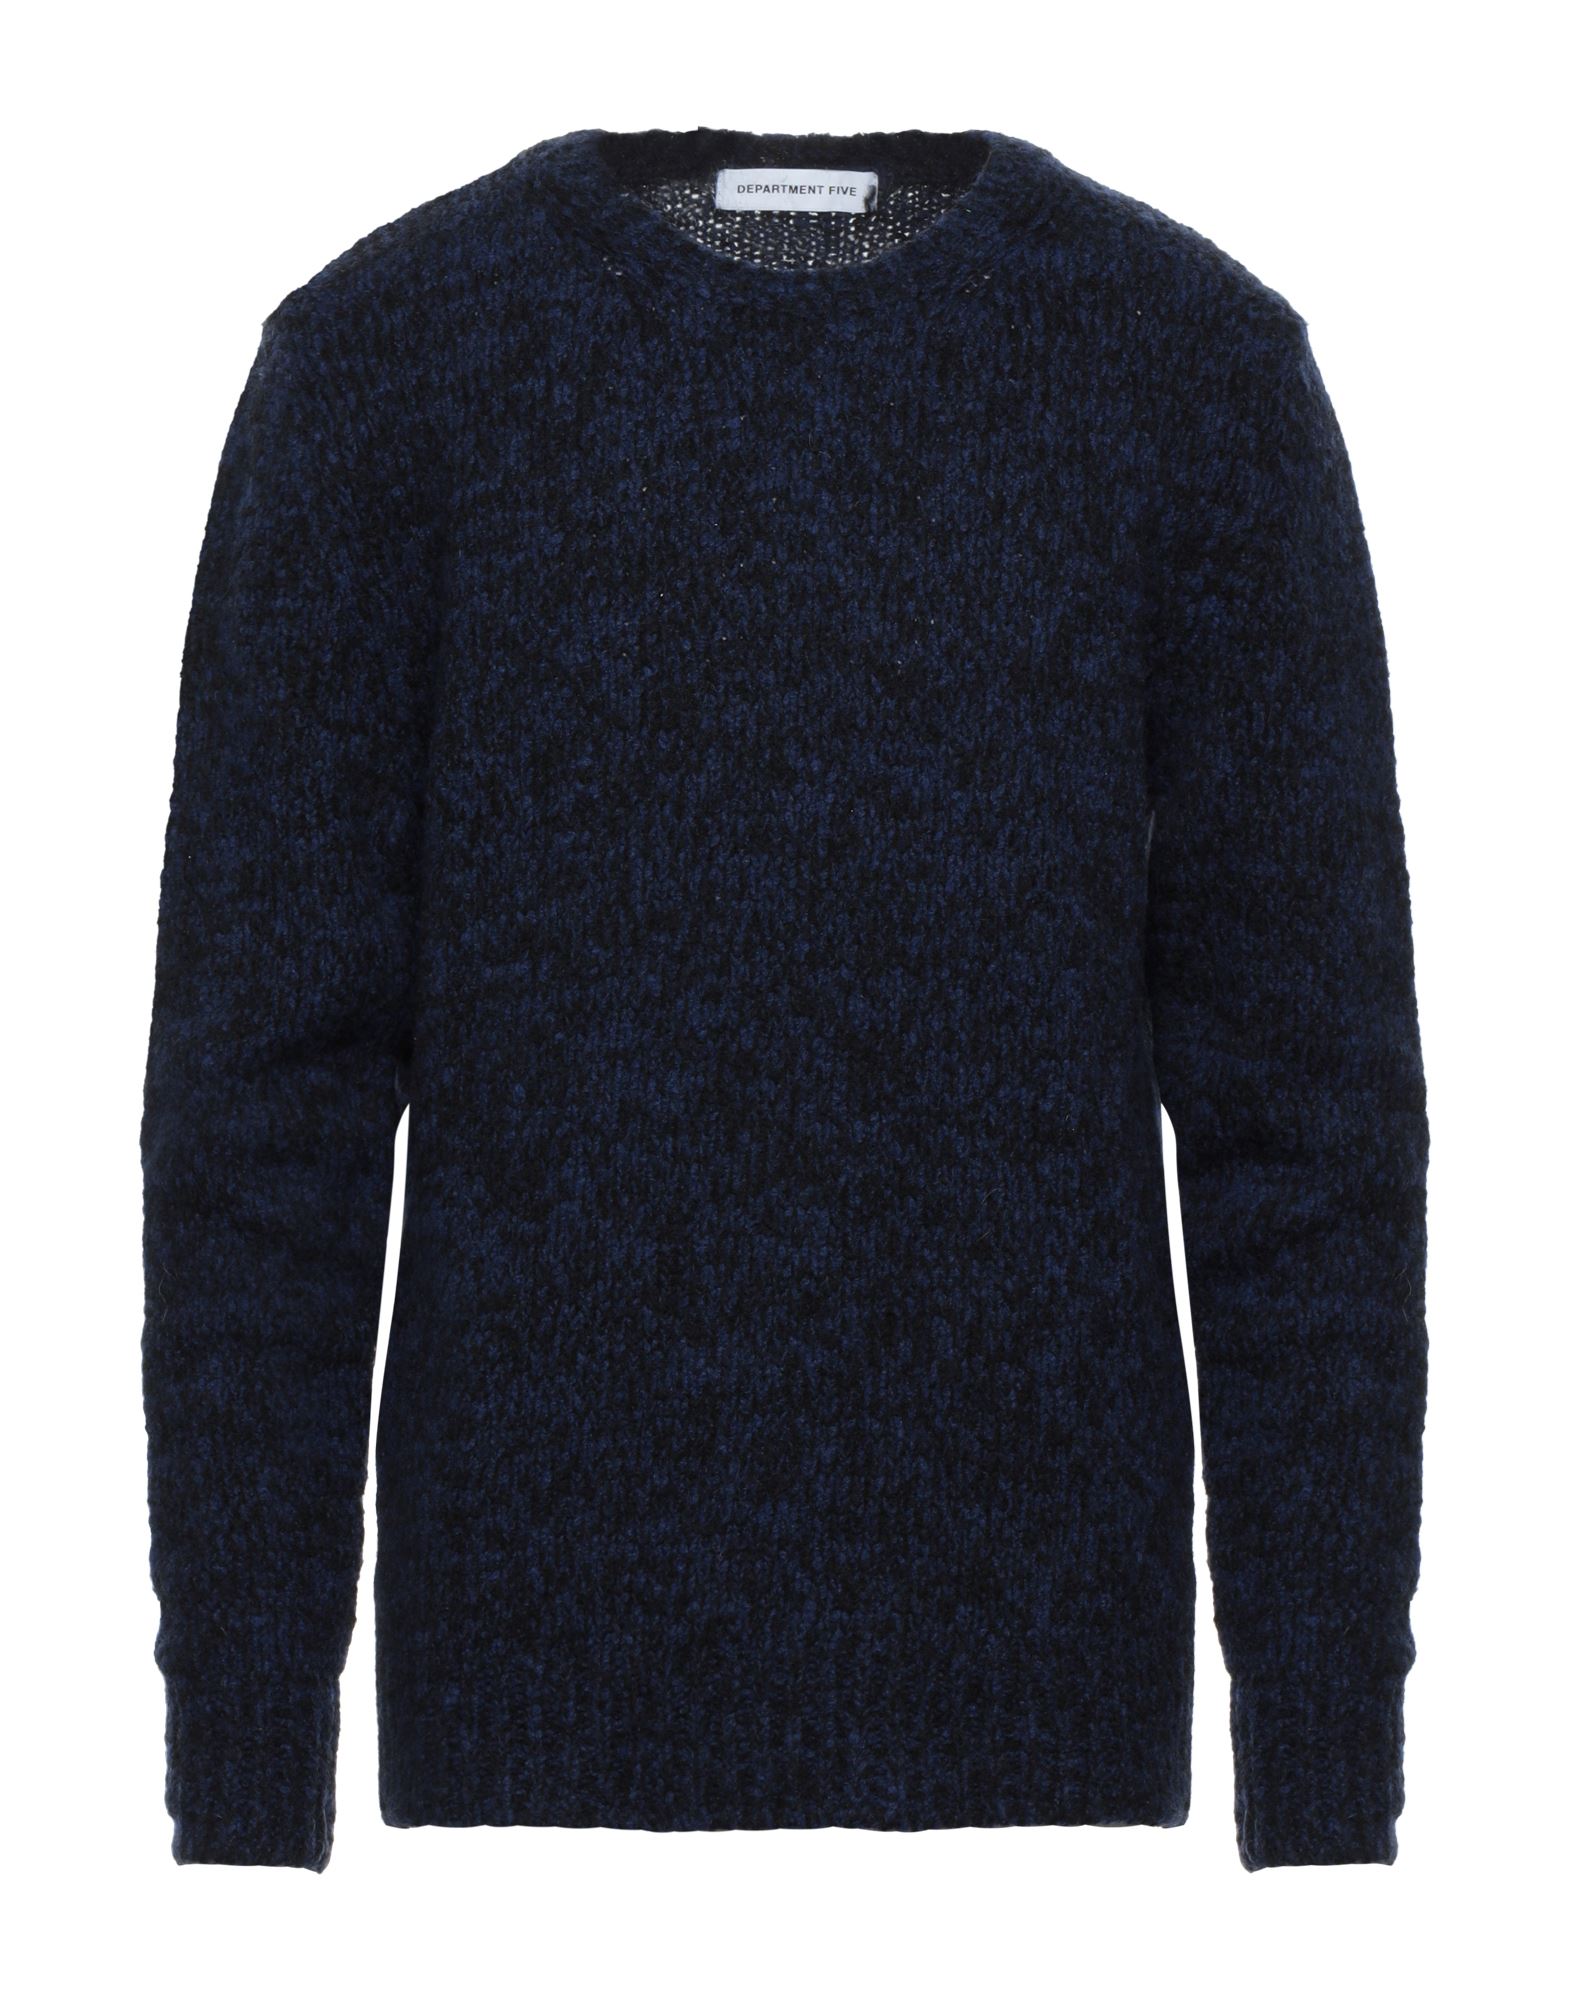 Shop Department 5 Man Sweater Midnight Blue Size M Wool, Cashmere, Nylon